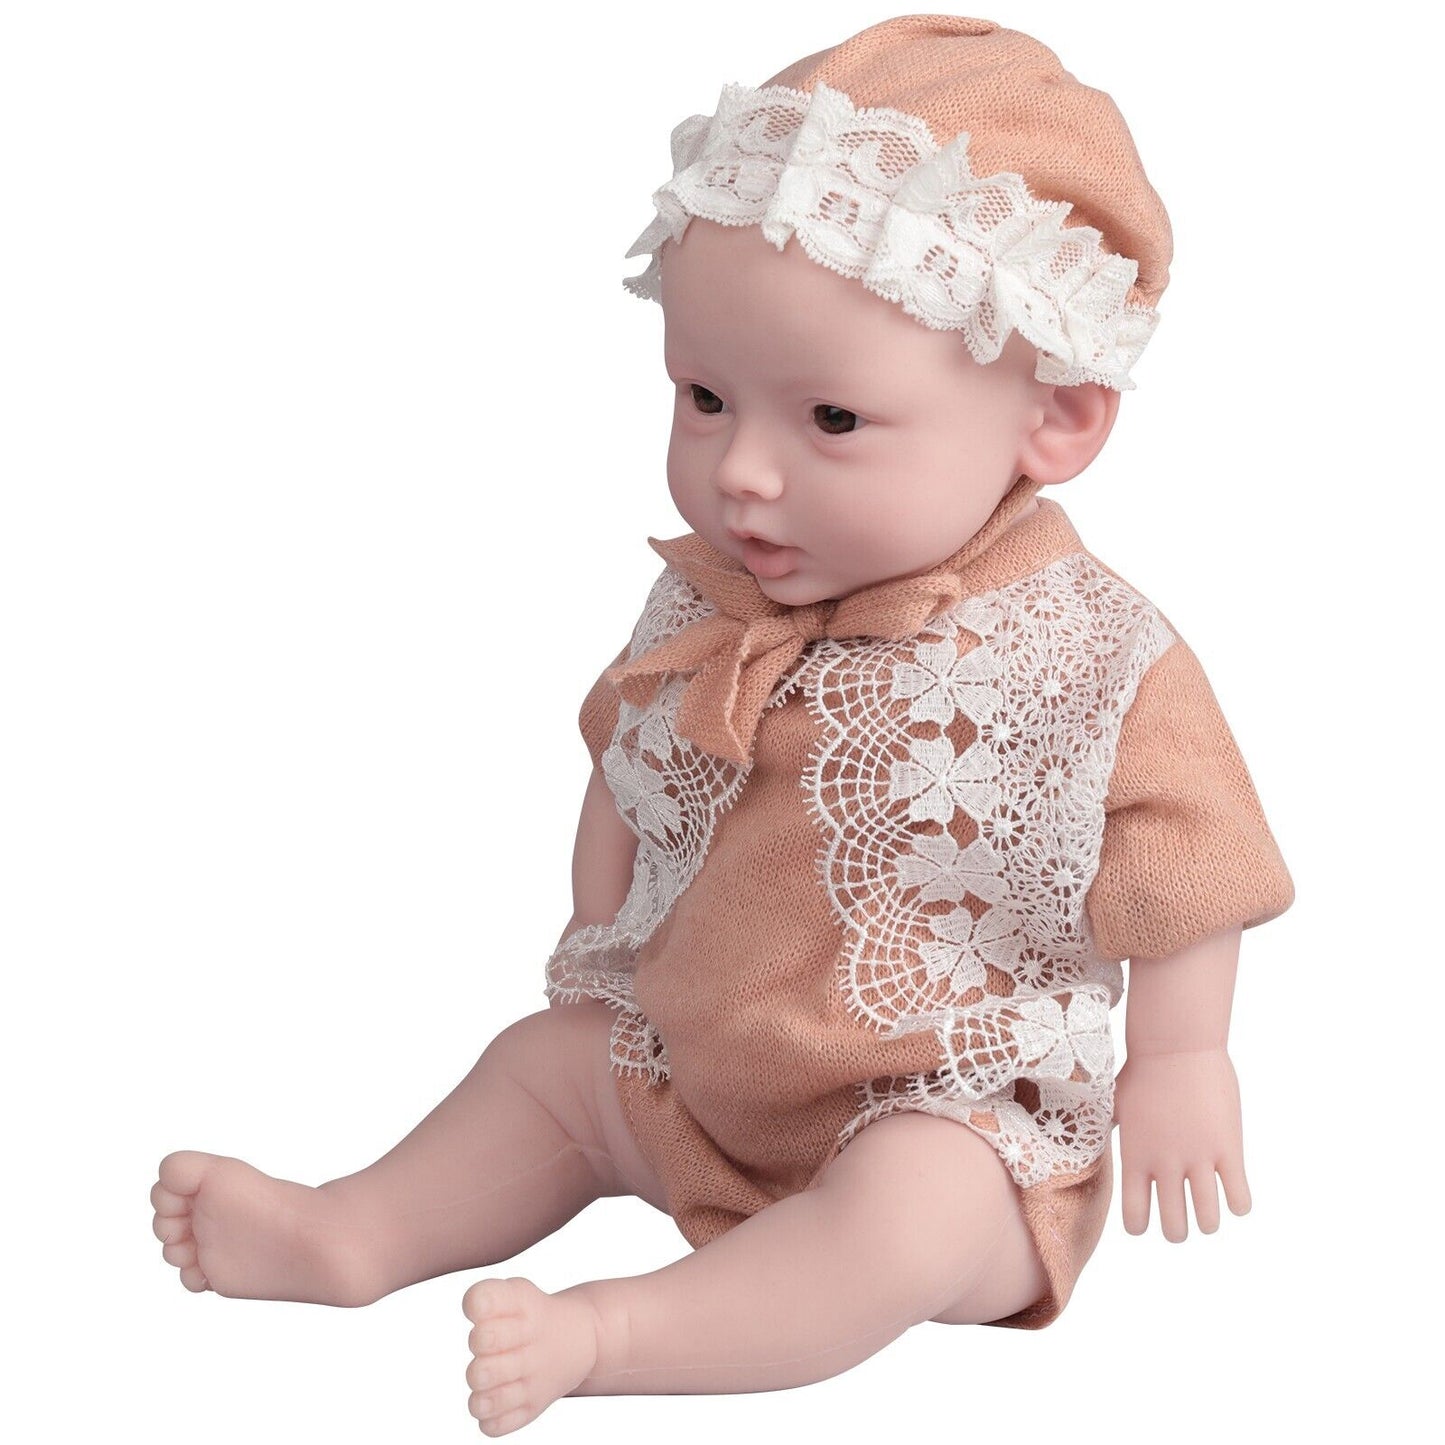 18" Reborn Doll Full Body Silicone Newborn Doll Lifesize Baby Girl HandMade Doll